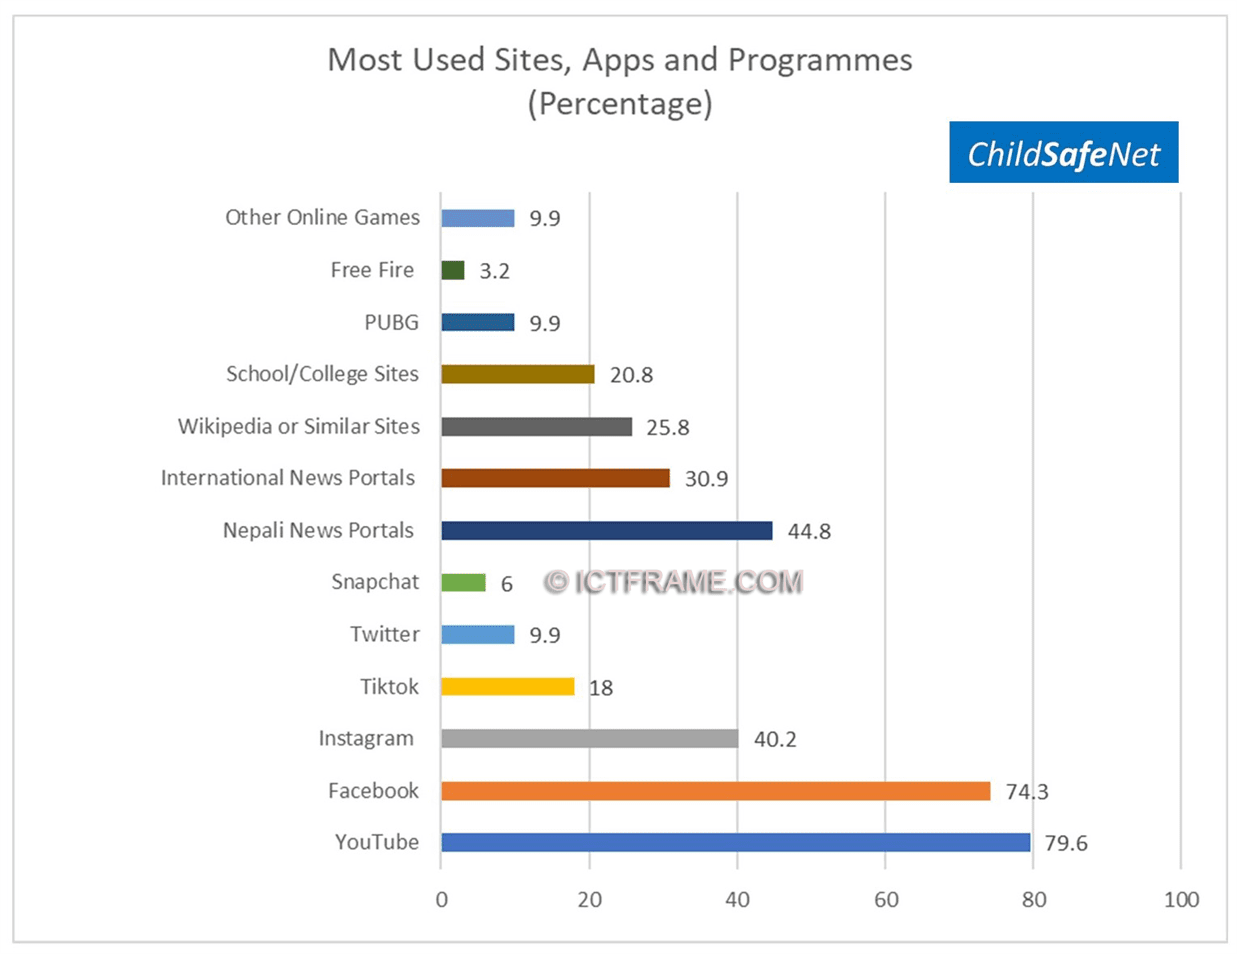 Childsafenet Survey Report 2020